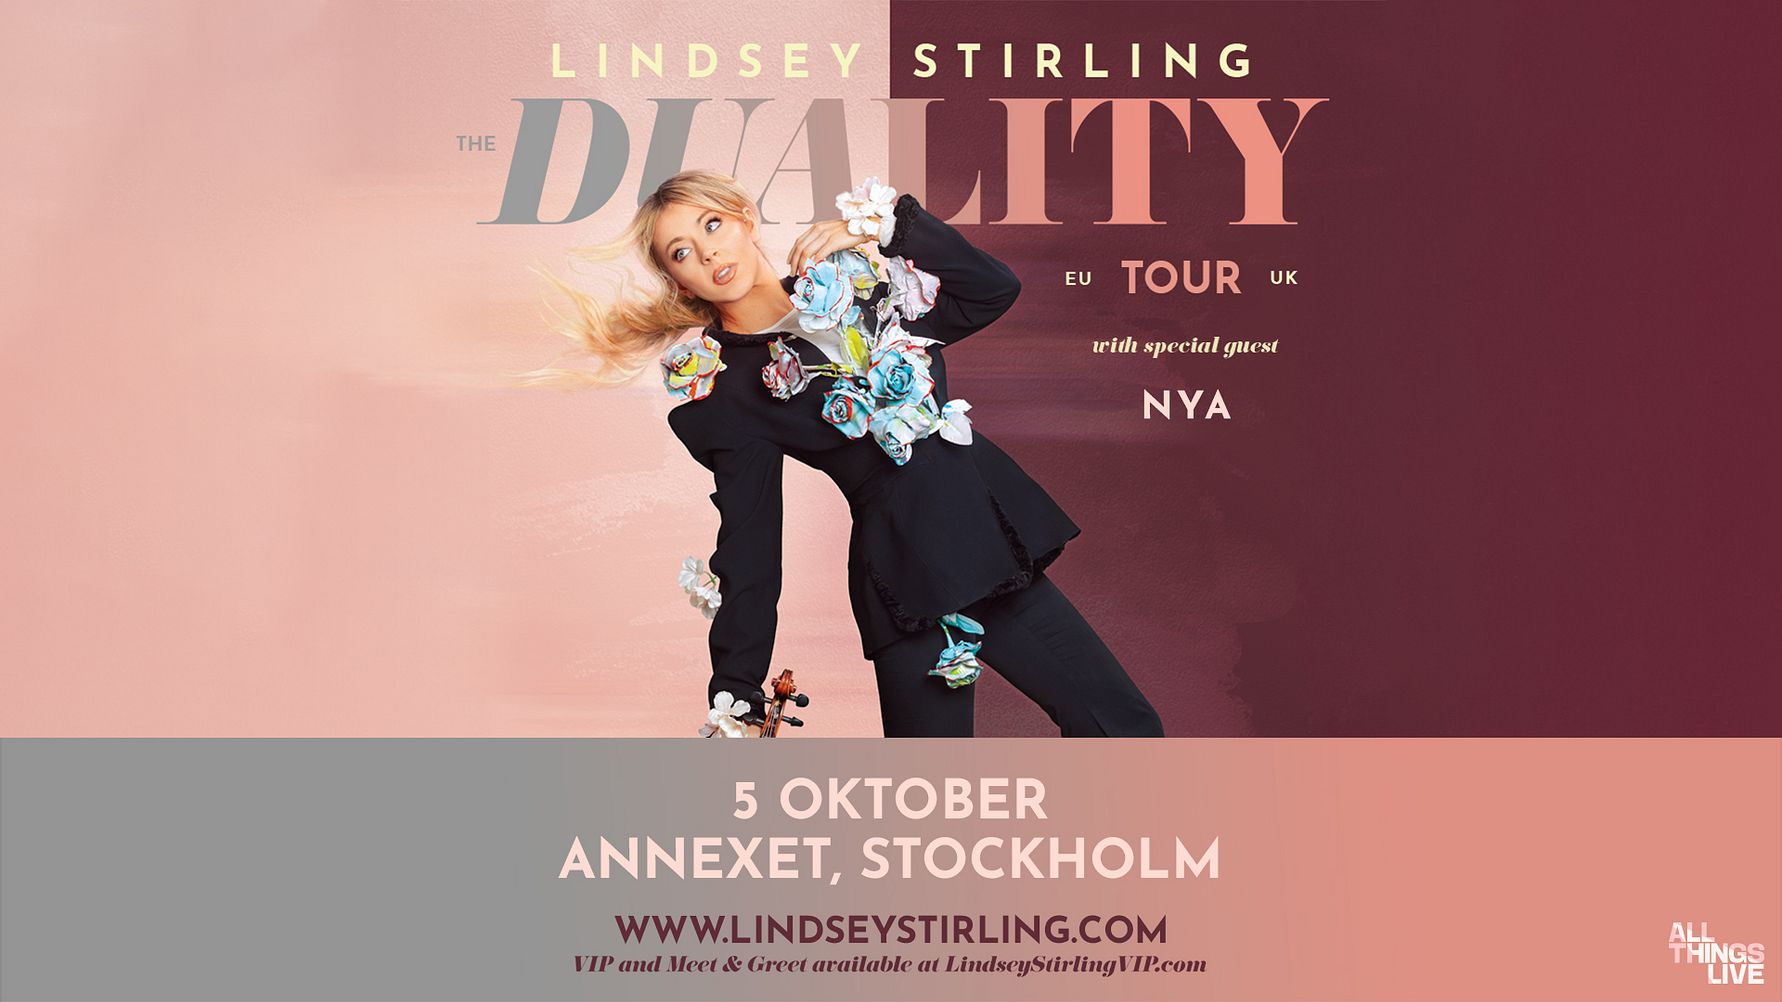 Global star Lindsey Stirling to the annex, Stockholm